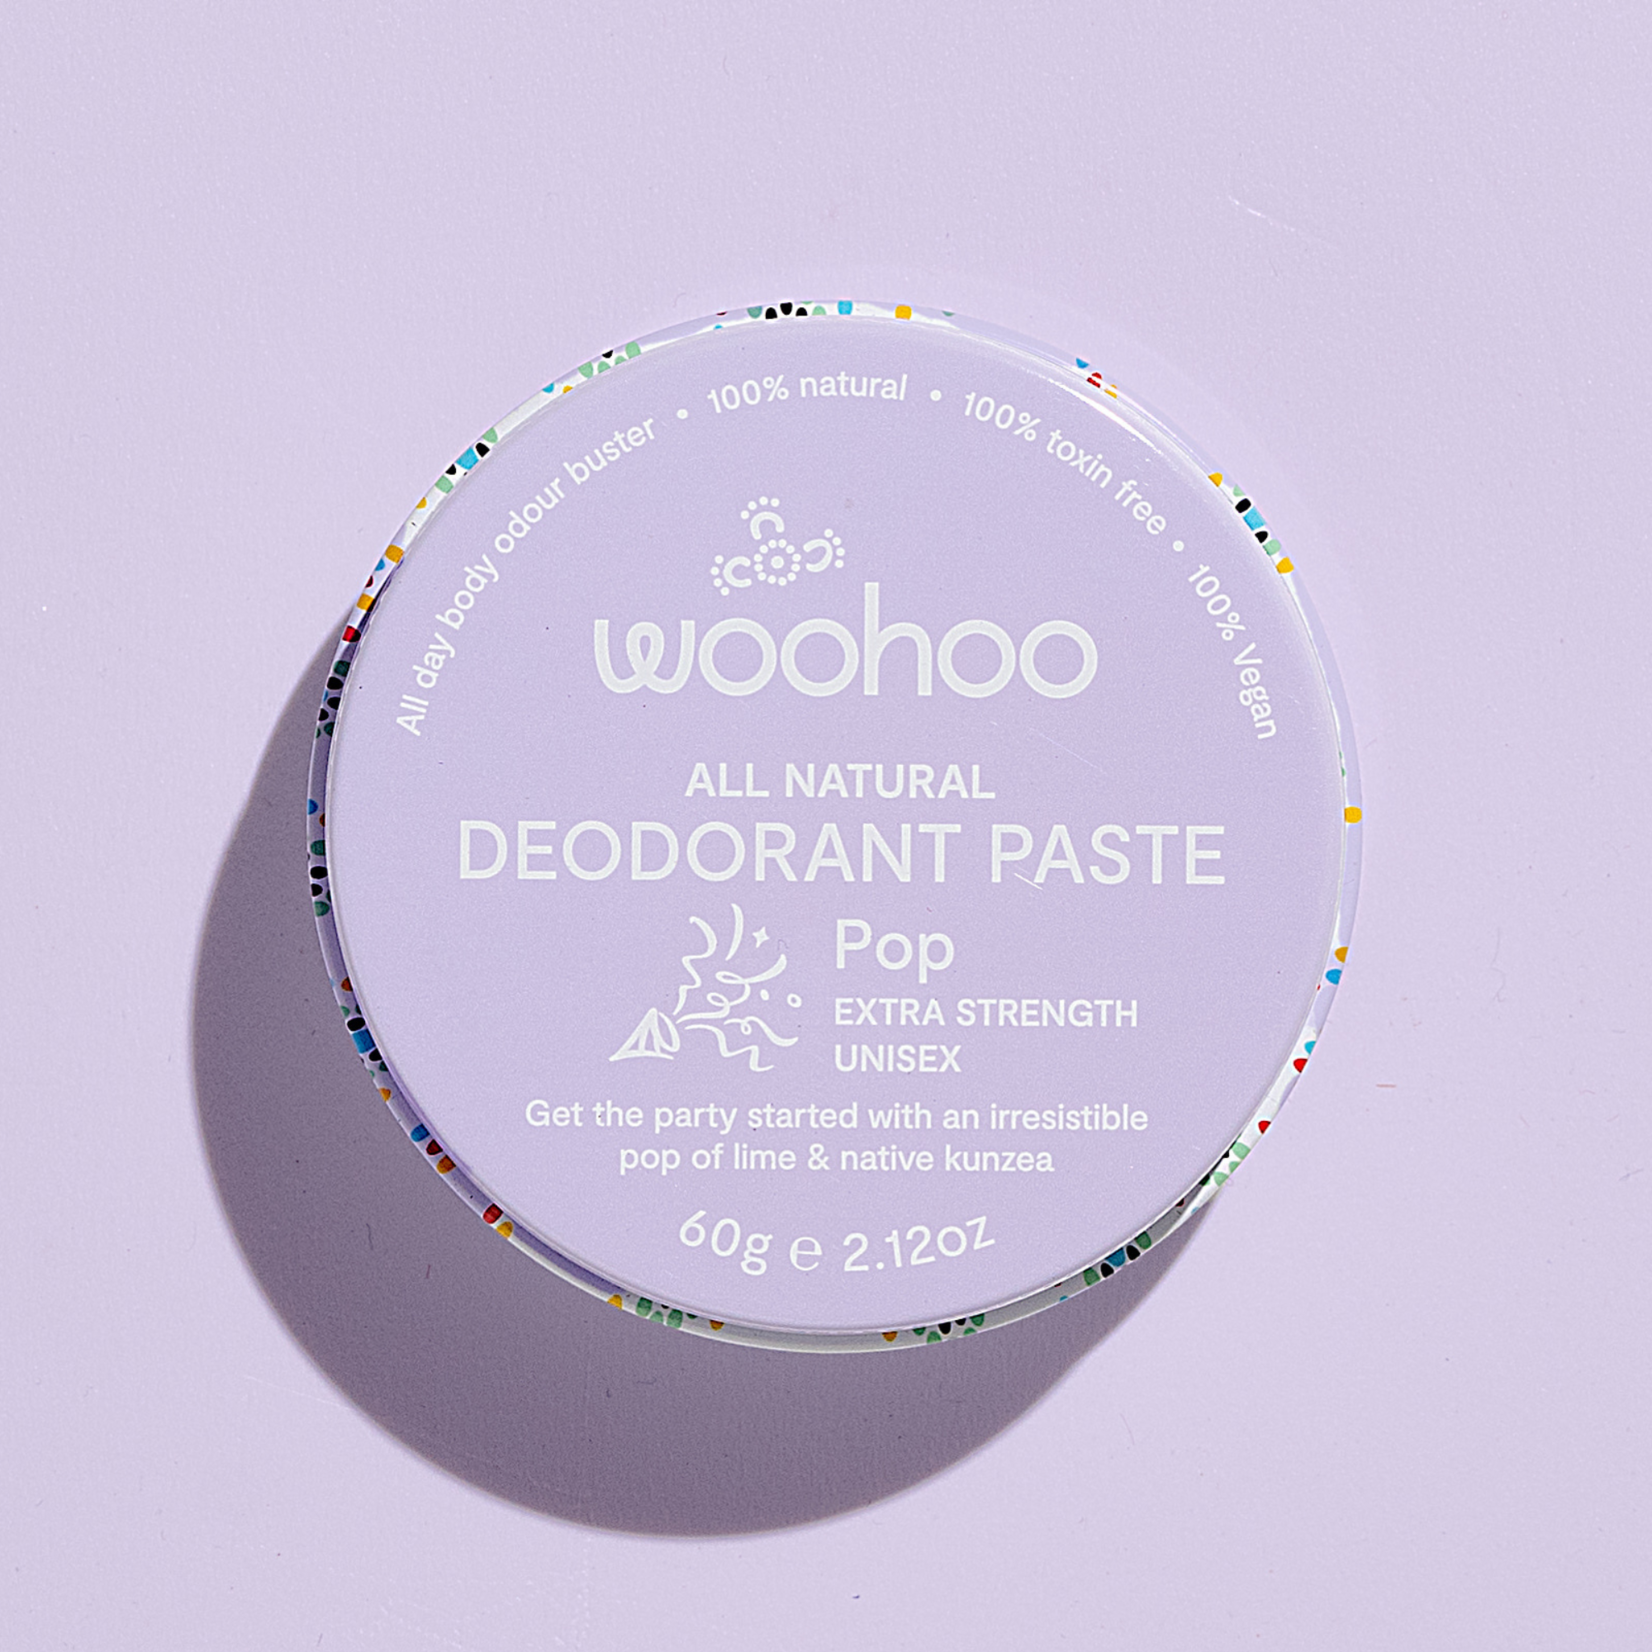 Woohoo Body Woohoo Deodorant Paste in Tin Pop